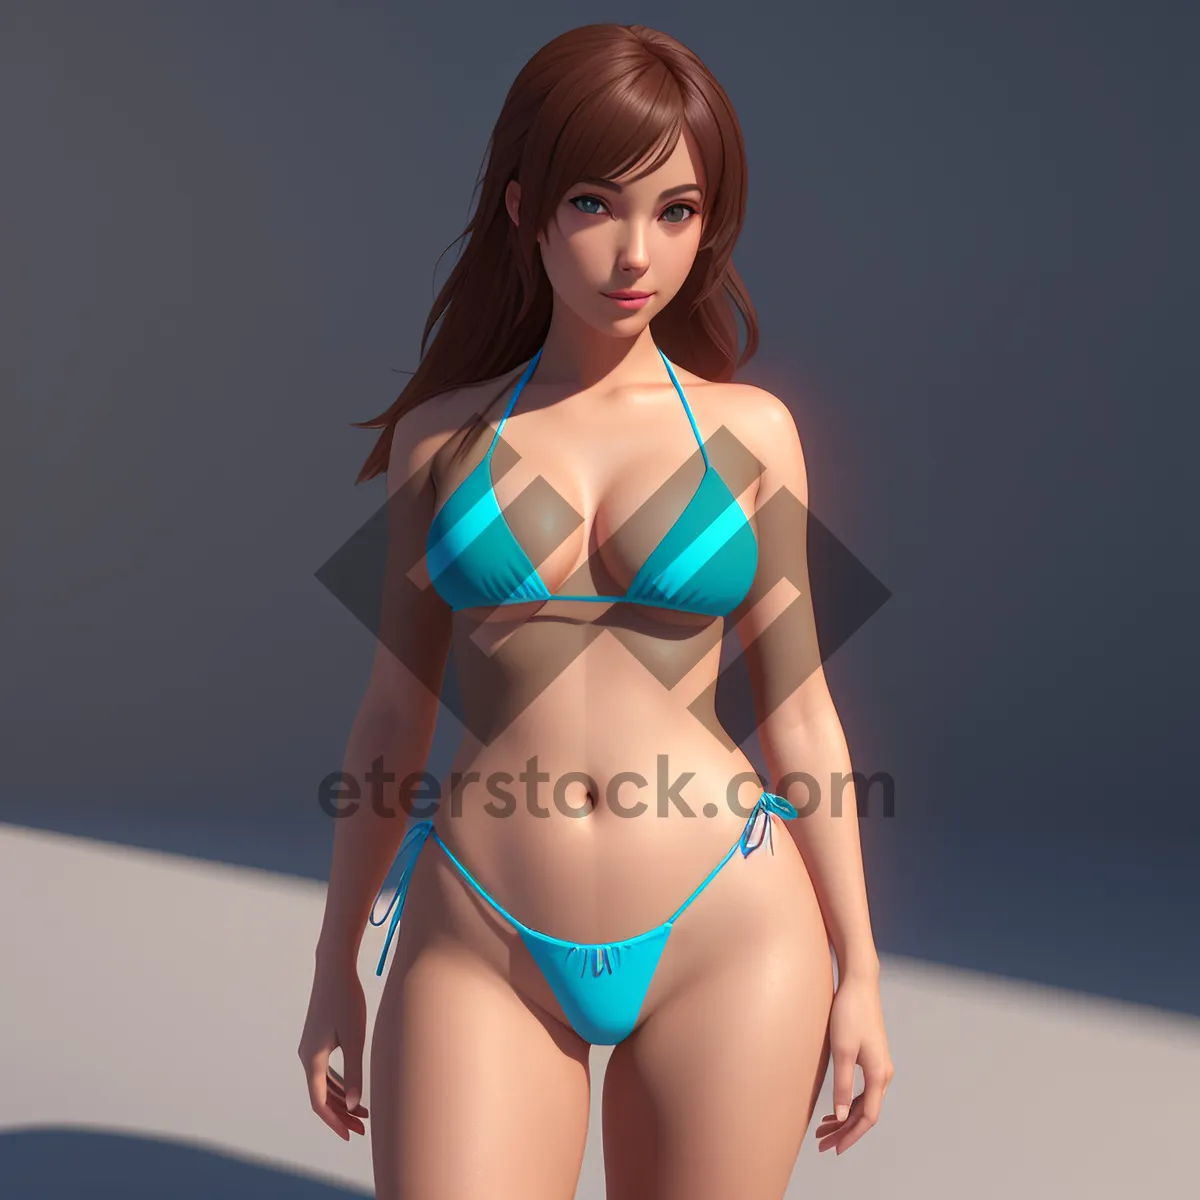 Picture of Sexy Beach Babe in Bikini: Stunning Summer Style